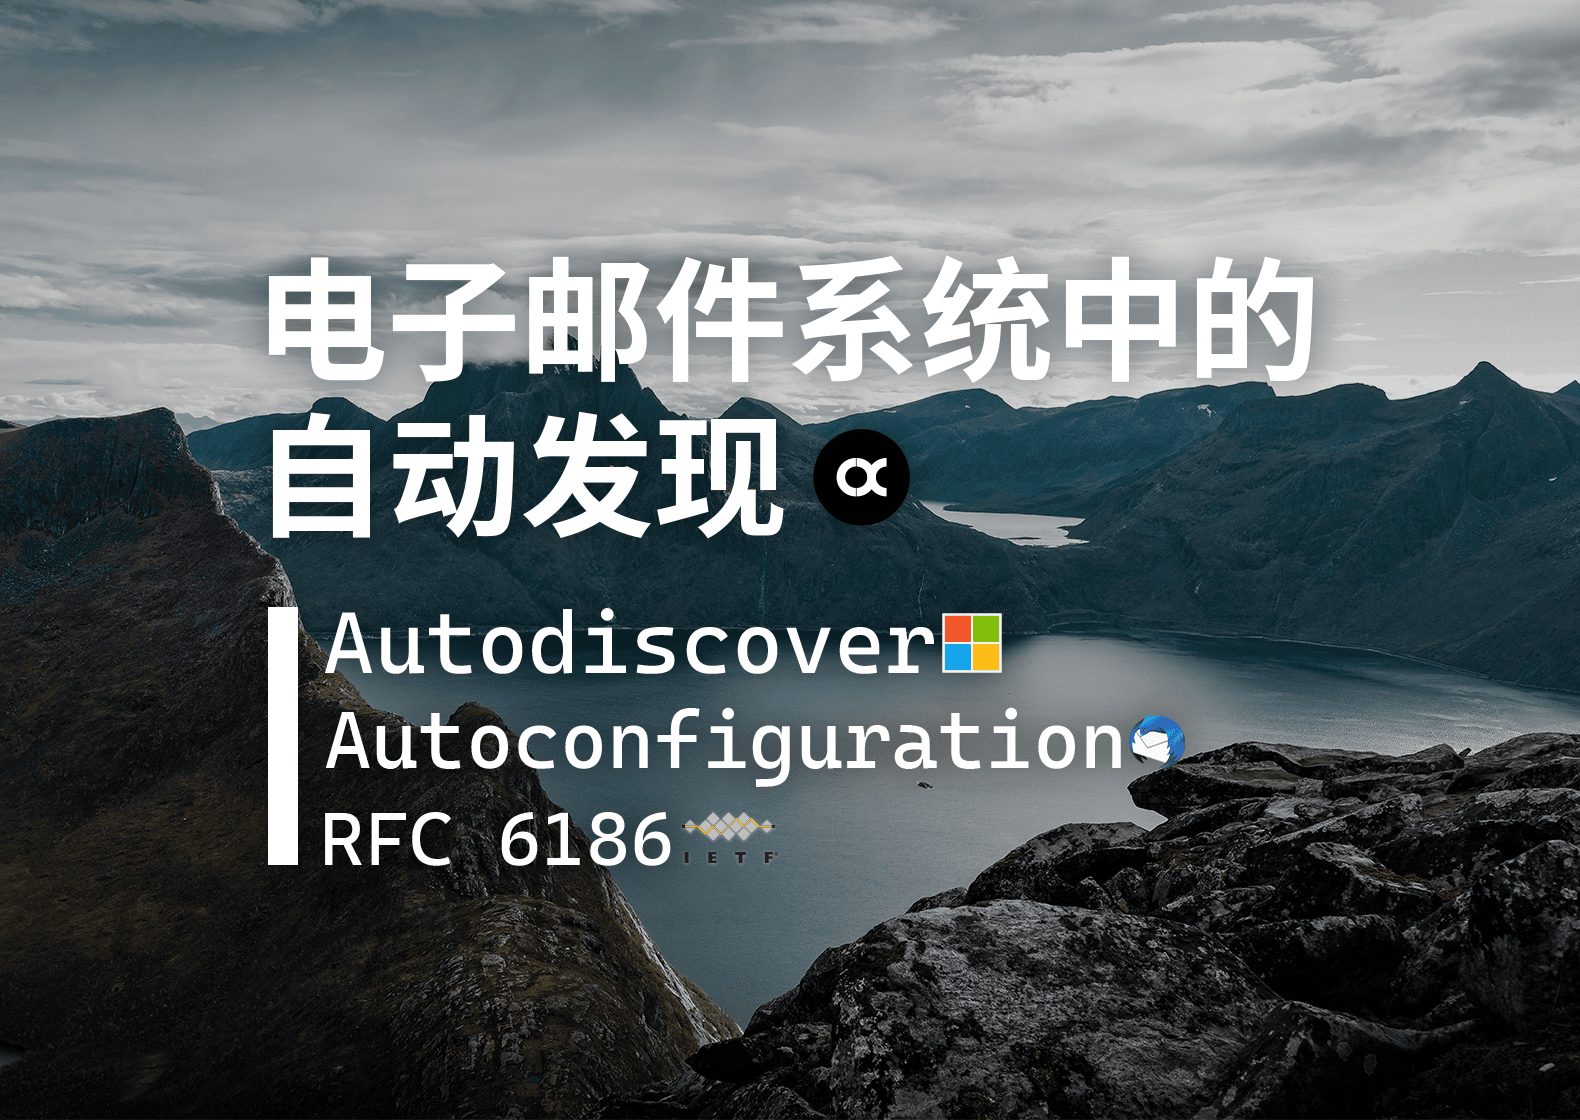 电子邮件系统的自动发现:  Autodiscover, Autoconfiguration 和 RFC 6186.